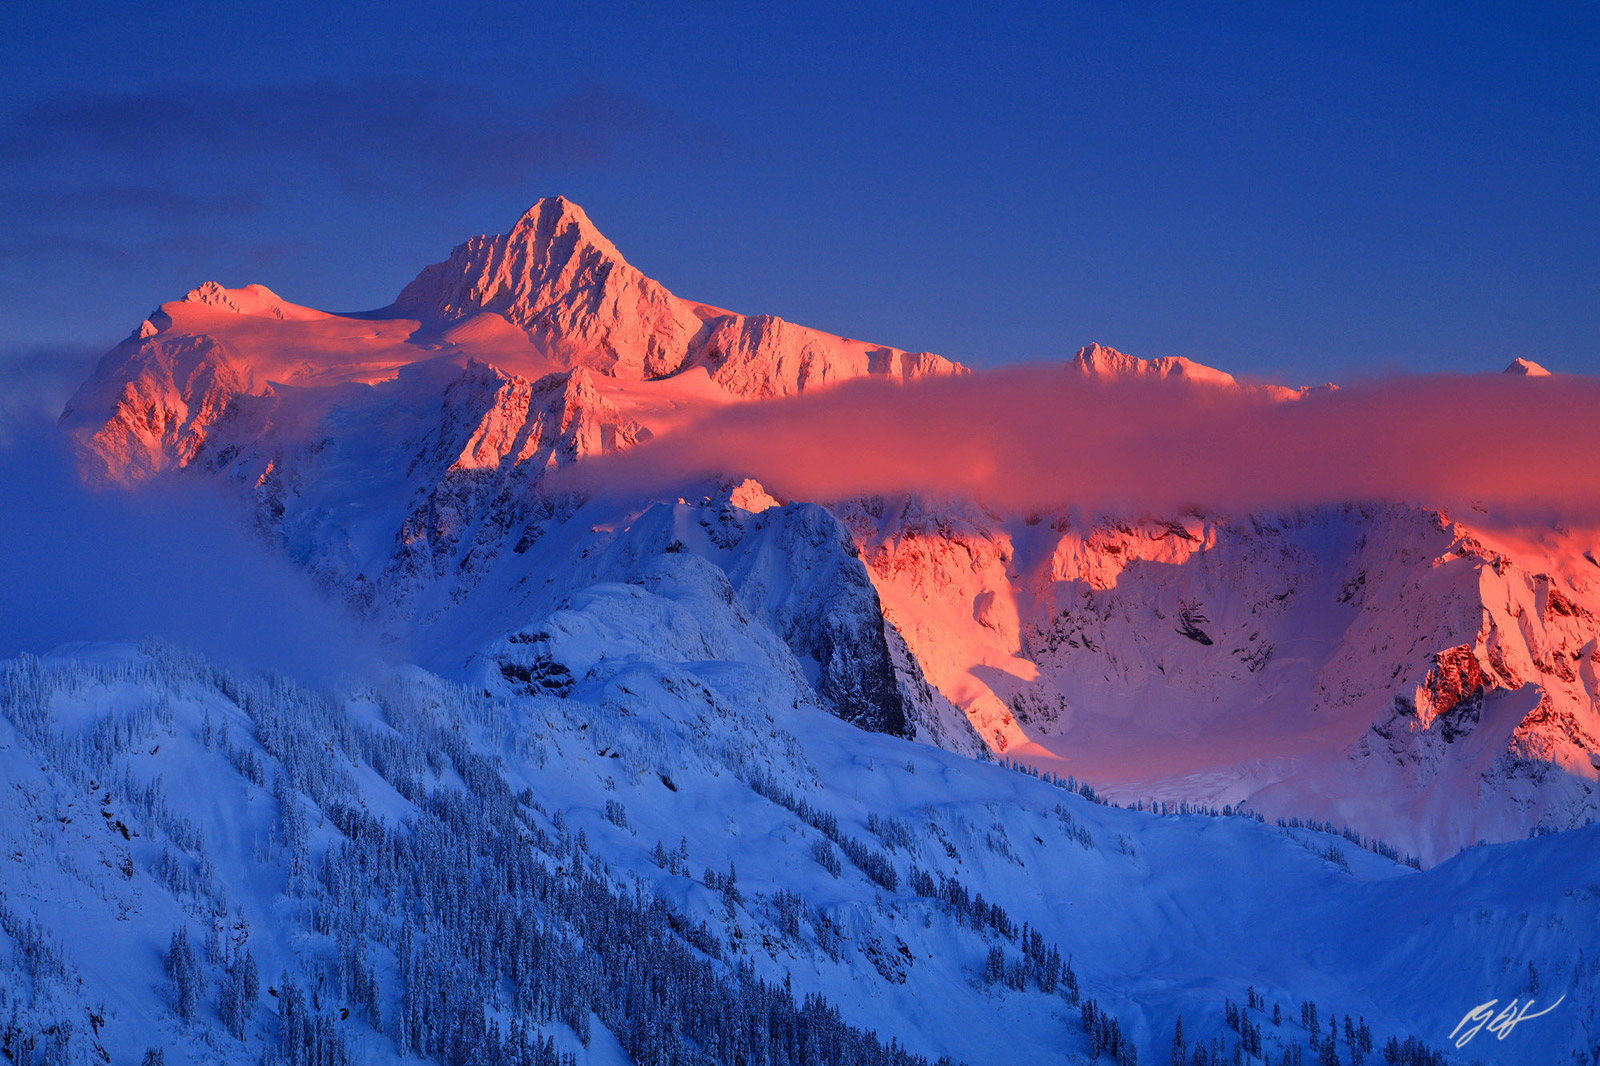 Winter Sunset on Mt Shuksan from Artist Ridge in the mt Basker National Recreation Area in Washington